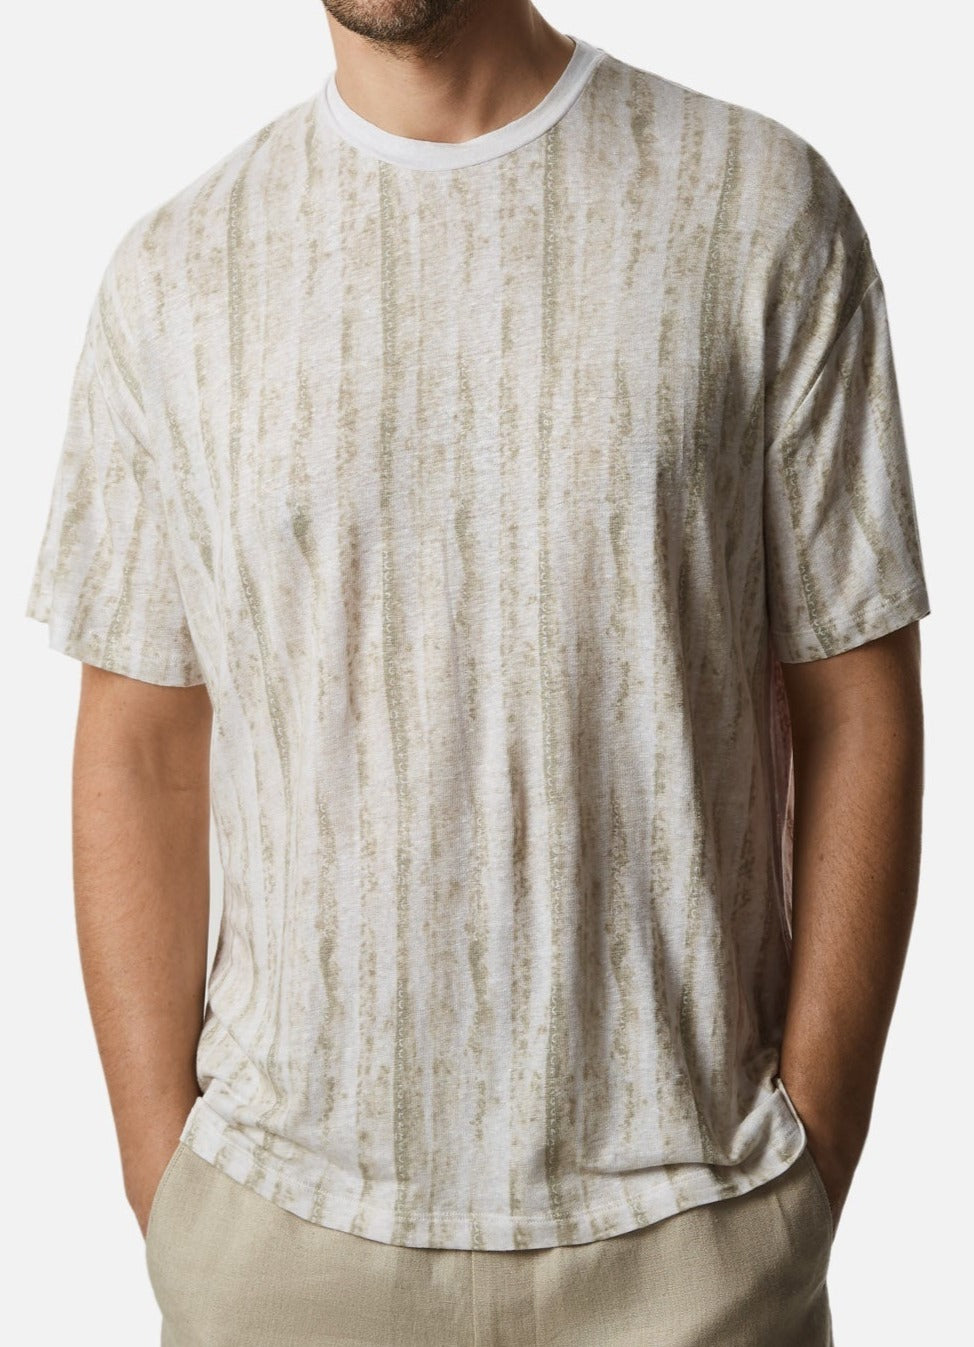 Men T-Shirt (Short Sleeve) | White Print Striped Linen T-Shirt by Spanish designer Adolfo Dominguez